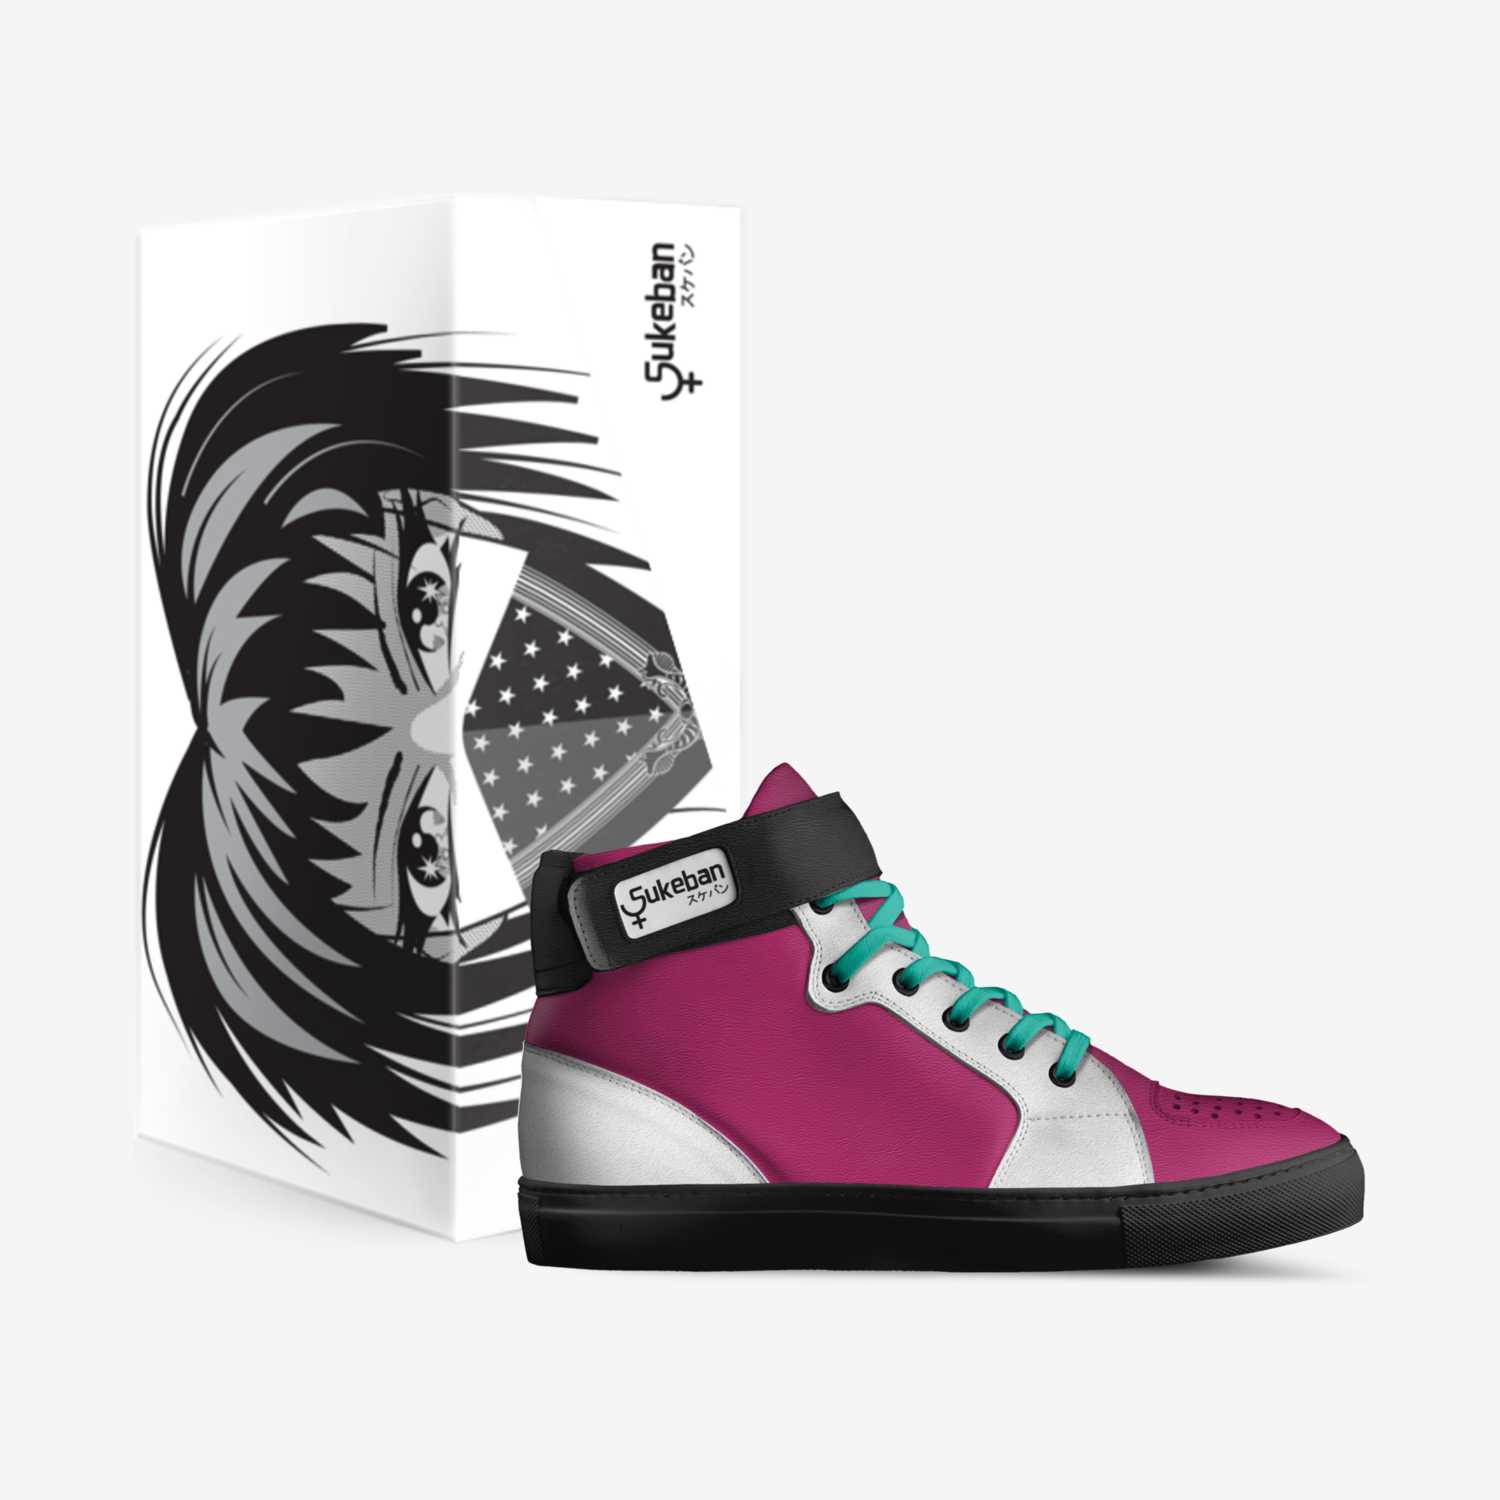 Sukeban custom made in Italy shoes by Jo Hughes | Box view